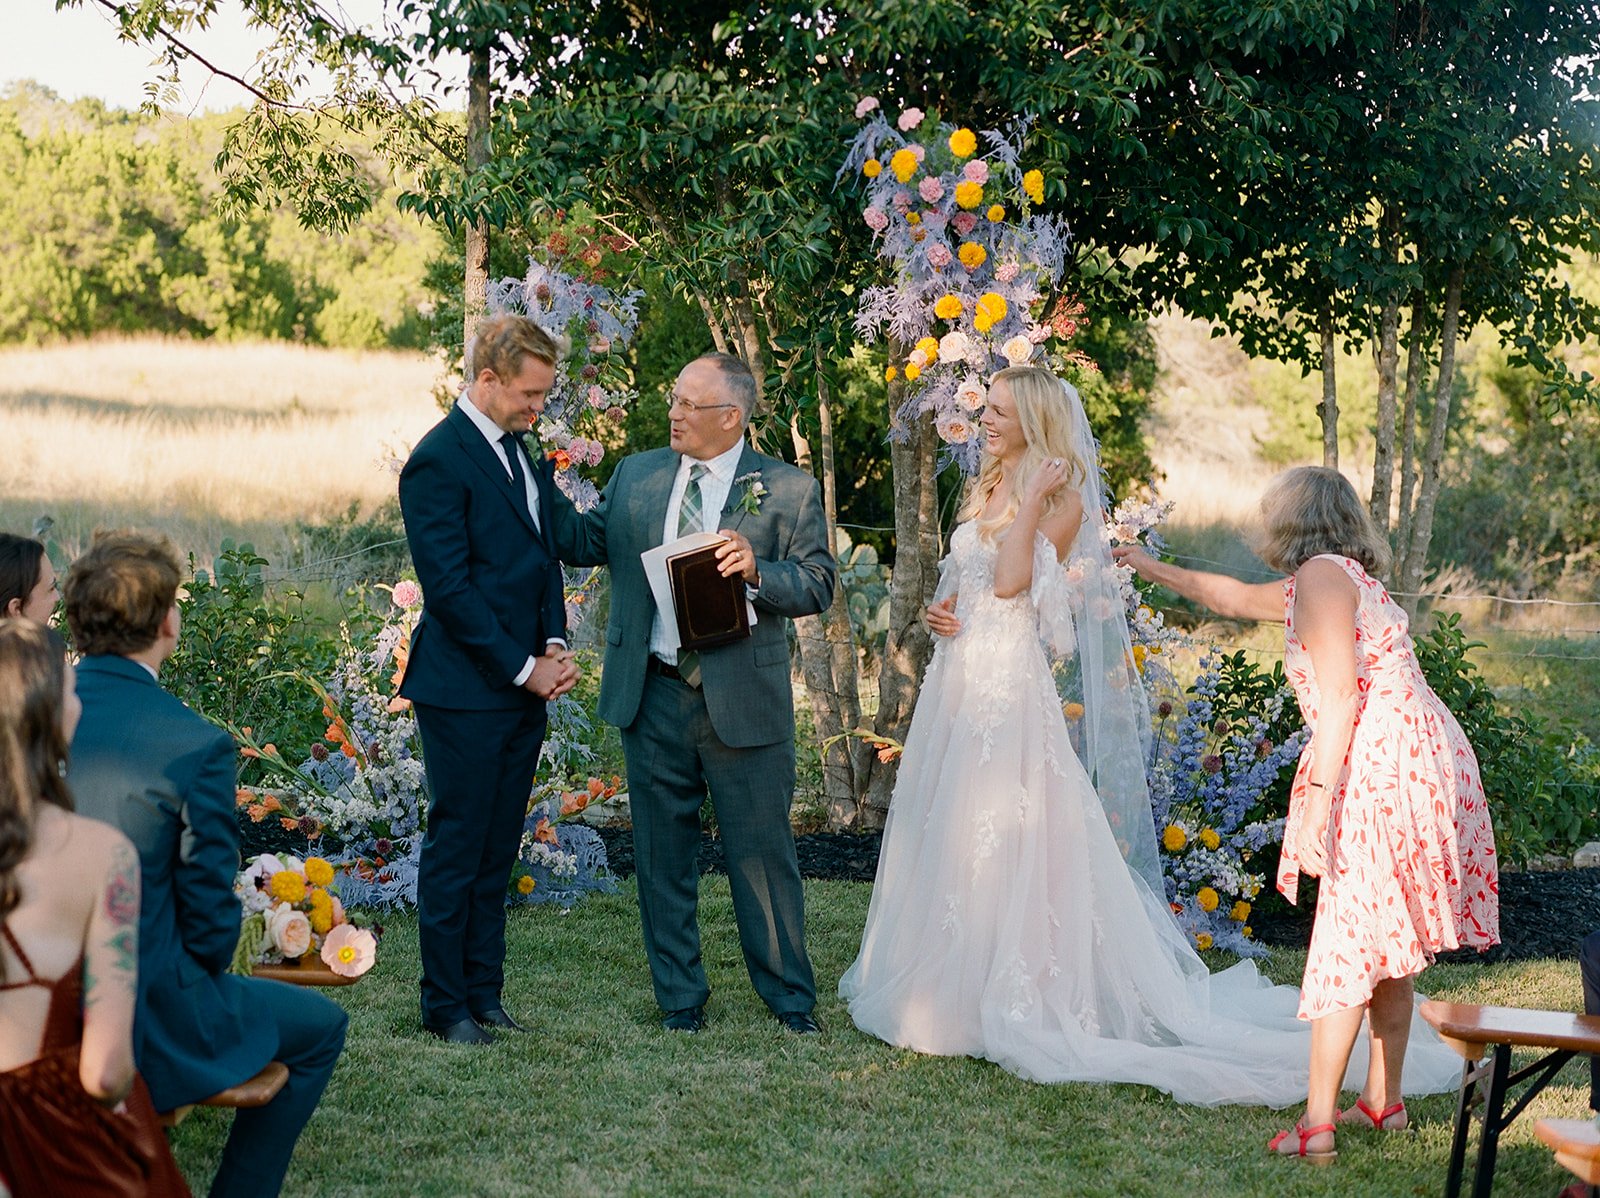 Best-Austin-Wedding-Photographers-Elopement-Film-35mm-Asheville-Santa-Barbara-Backyard-30.jpg